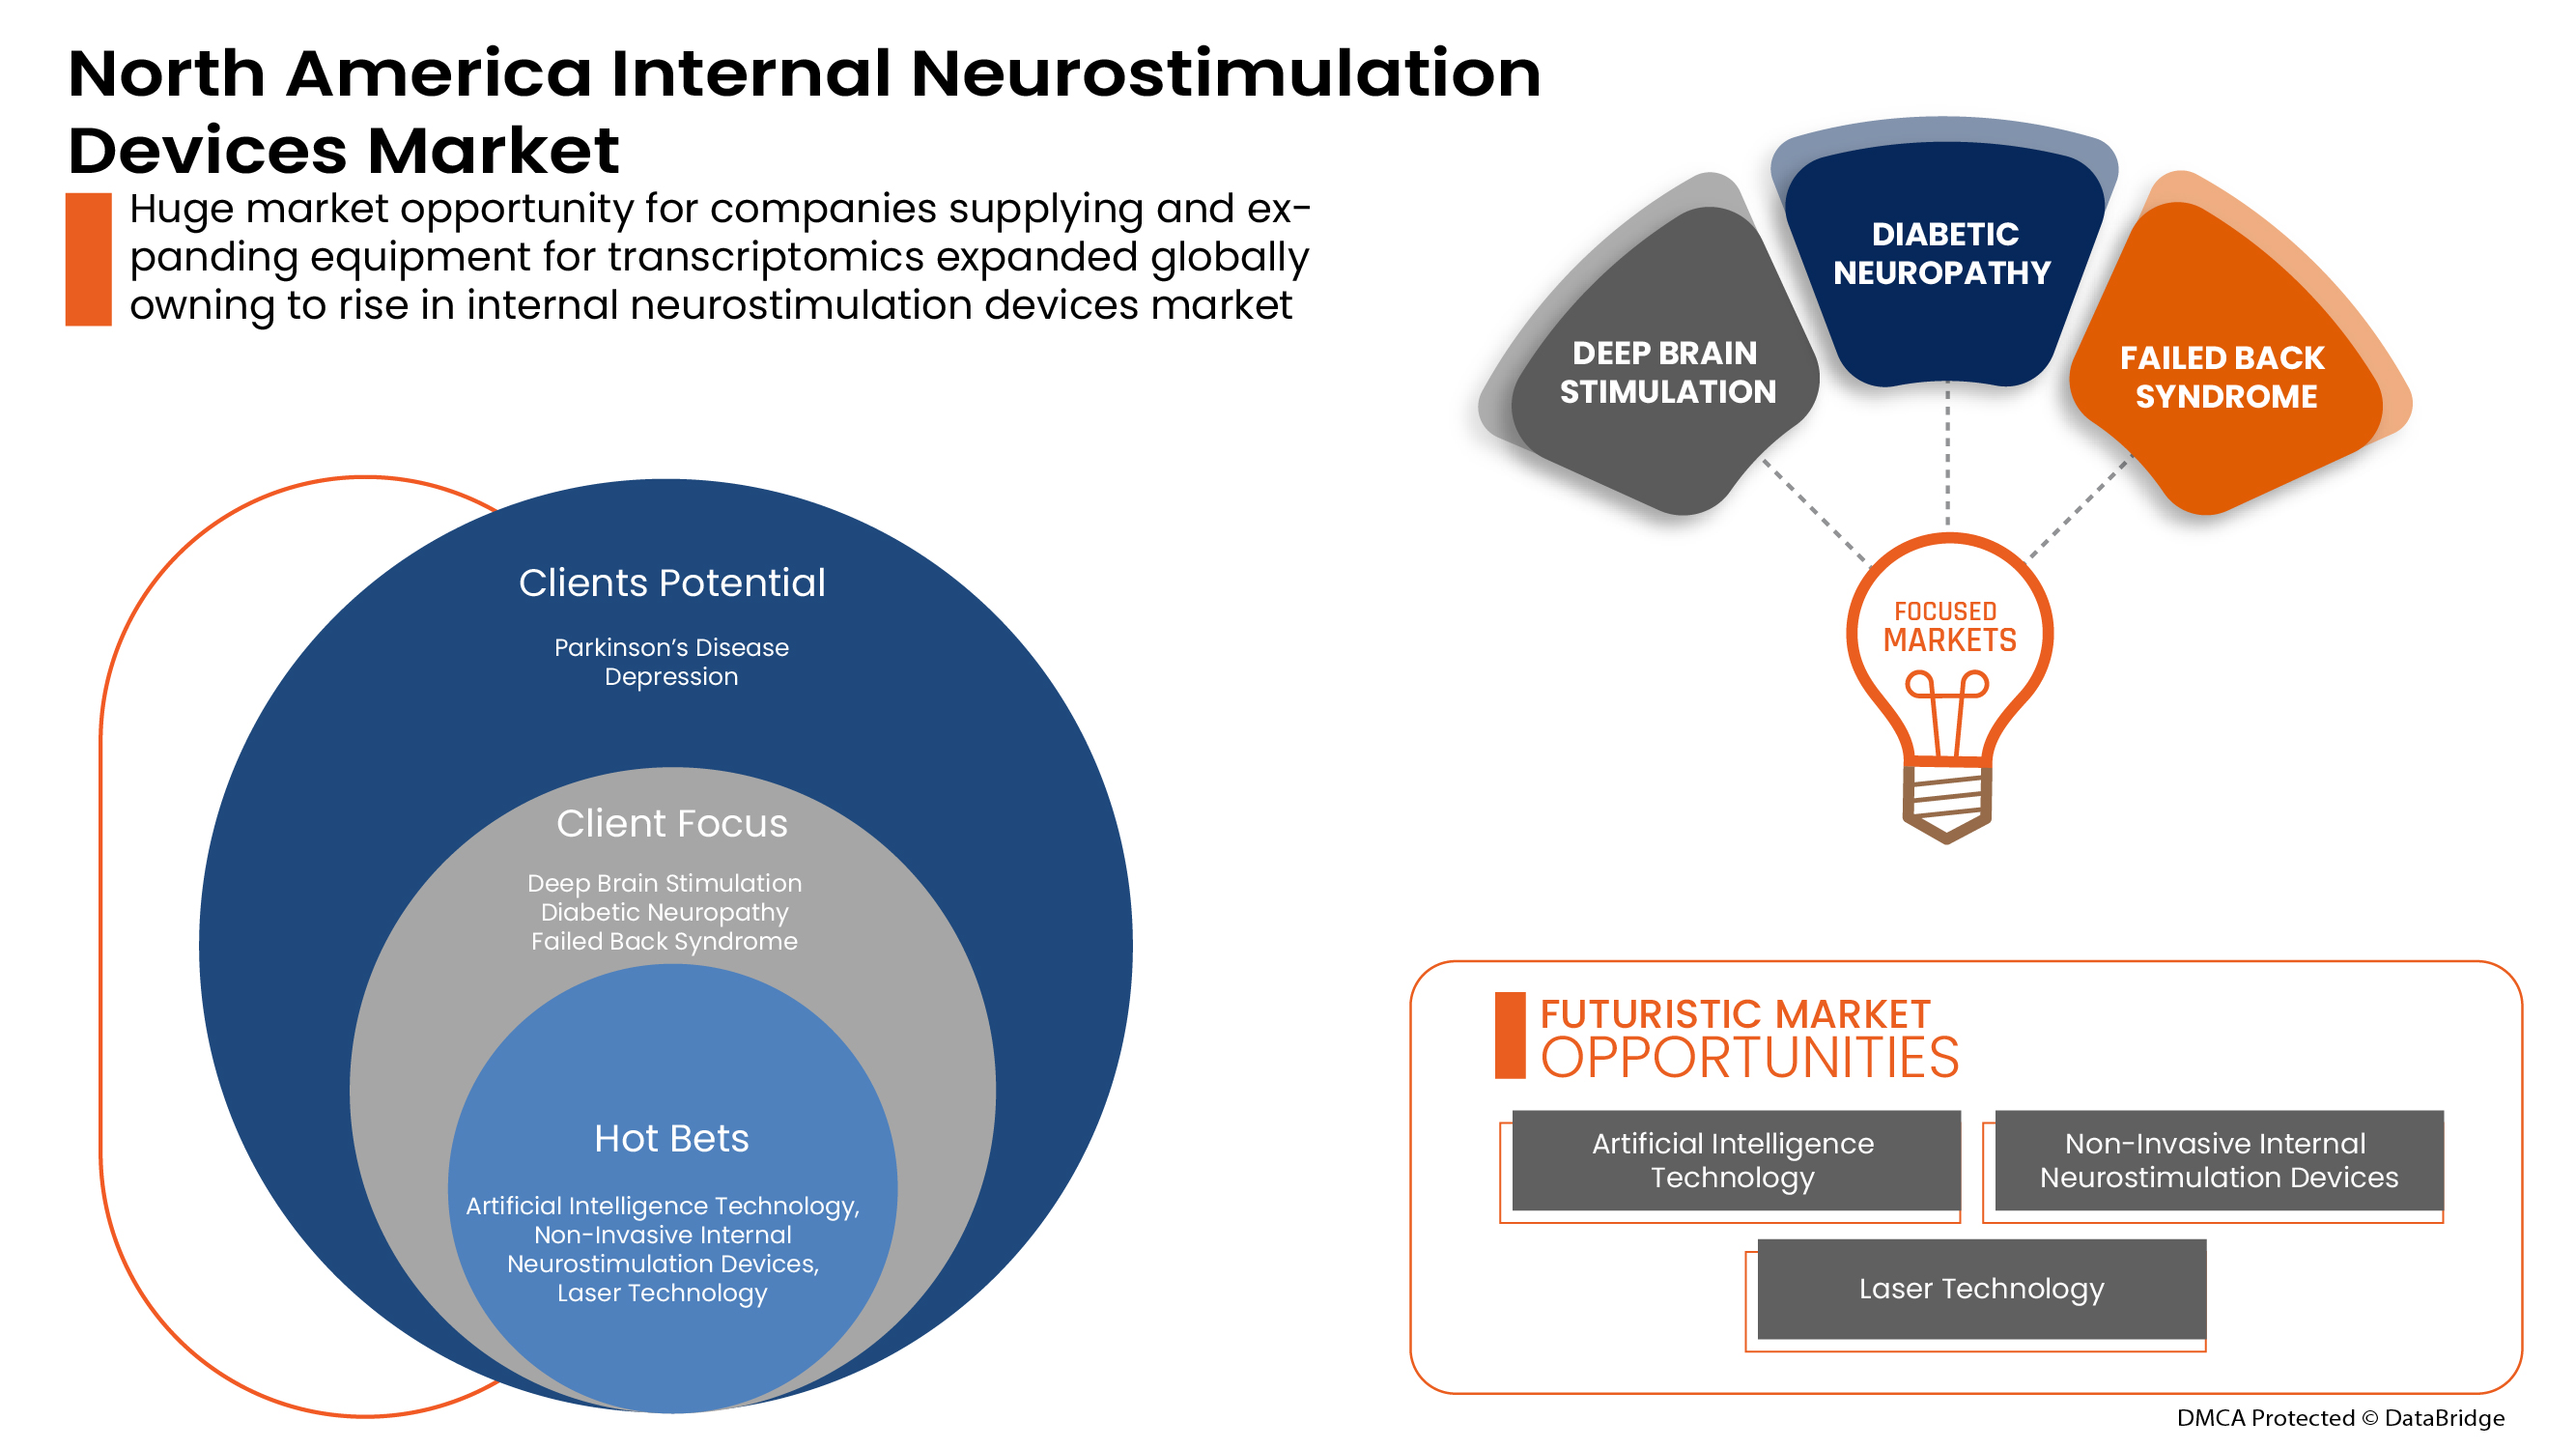 North America Internal Neurostimulation Devices Market